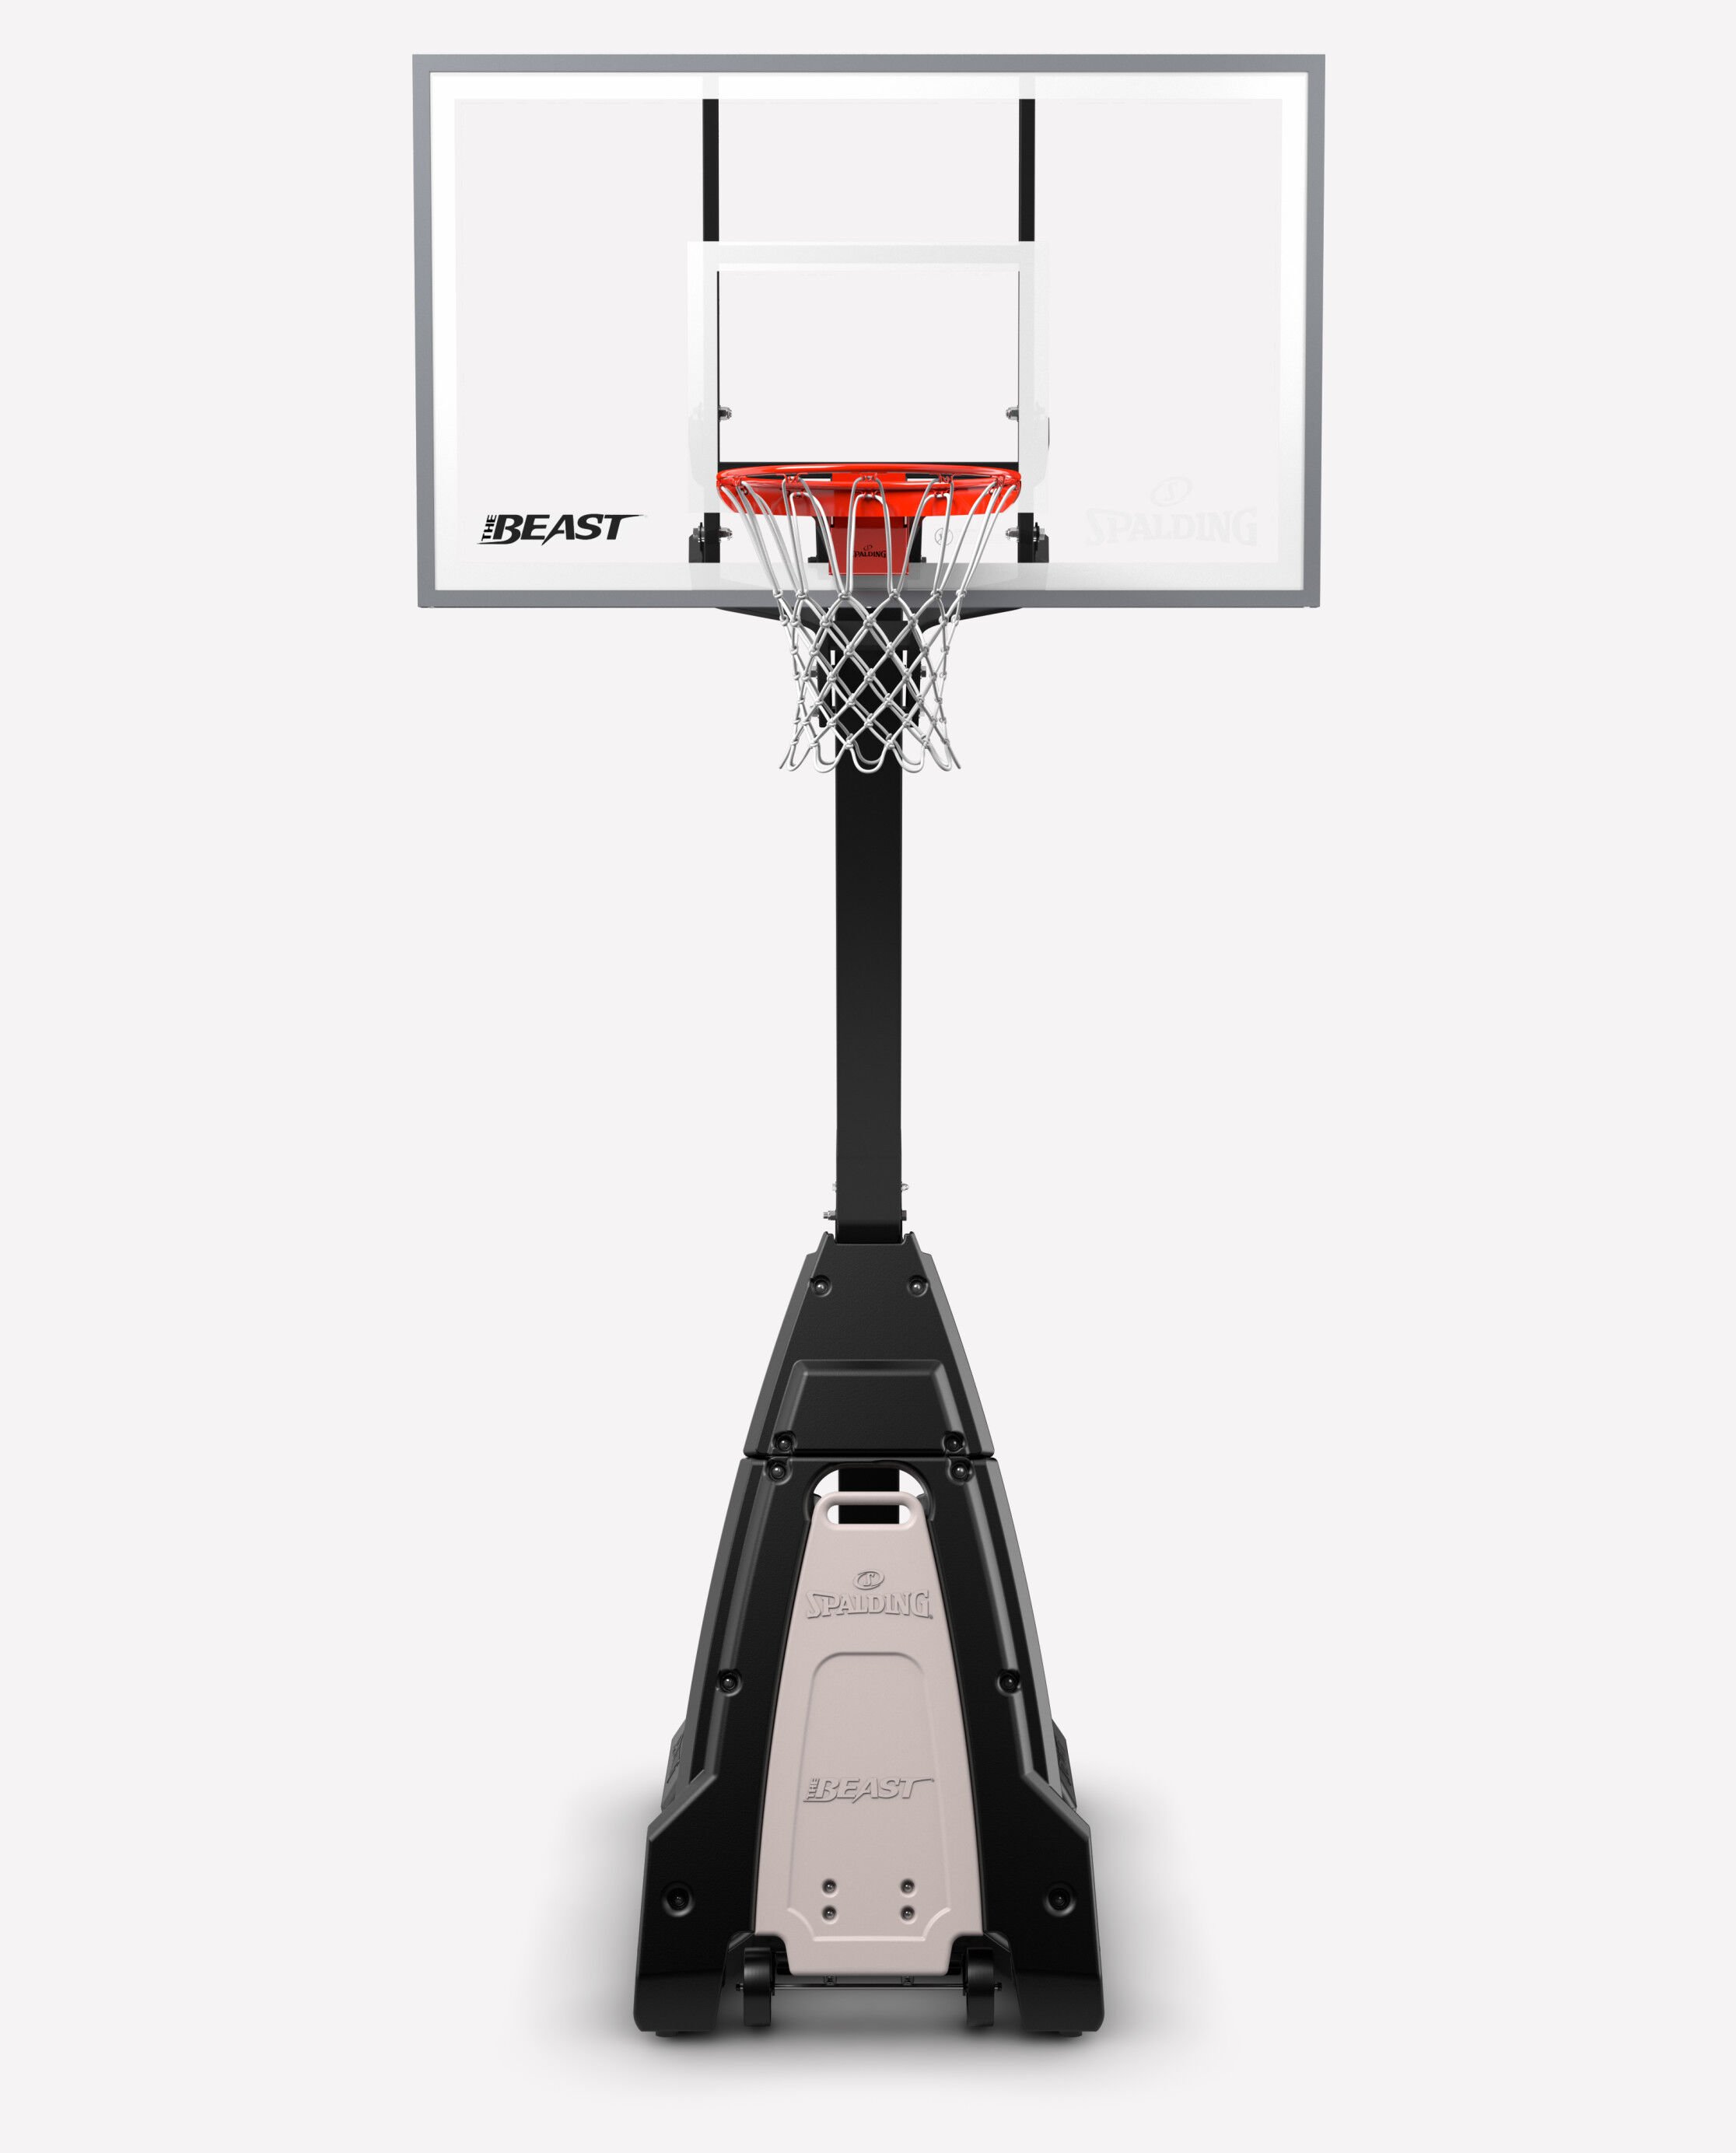 The Beast 60" Portable Basketball Hoop